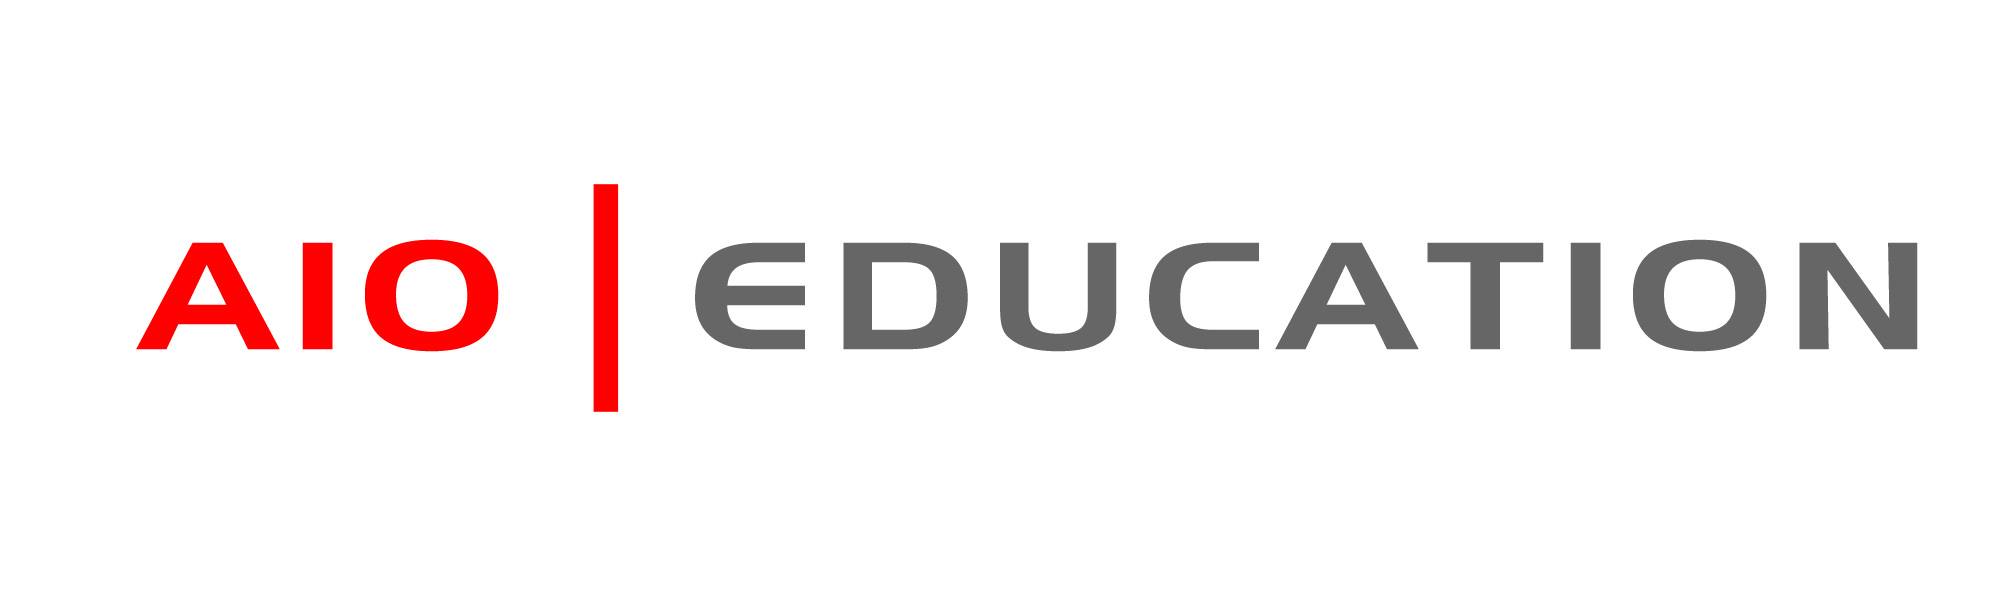 AIO Education logo